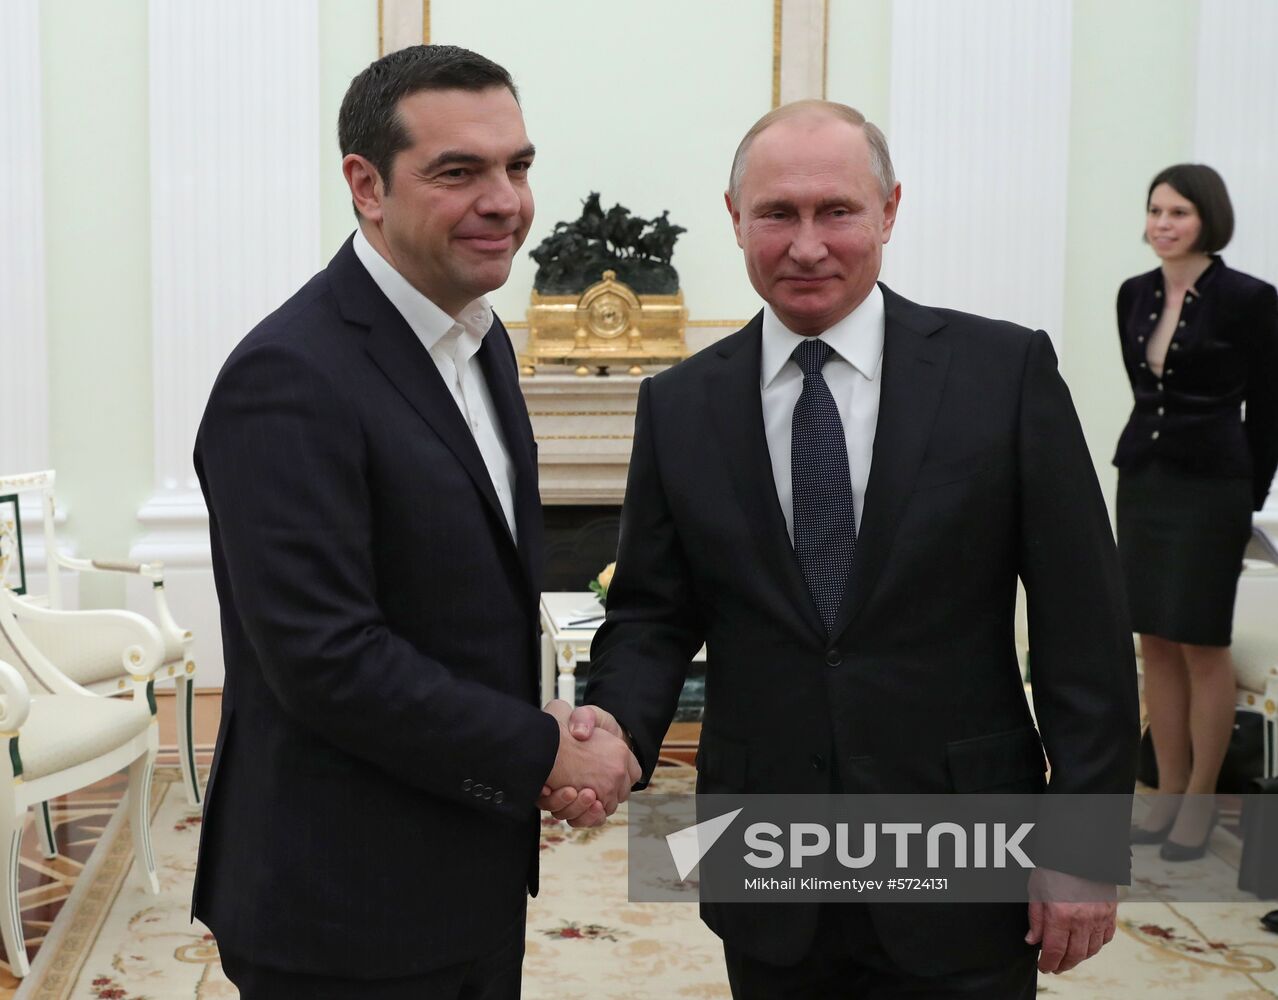 President Vladimir Putin's meeting with Prime Minister of Greece Alexis Tsipras